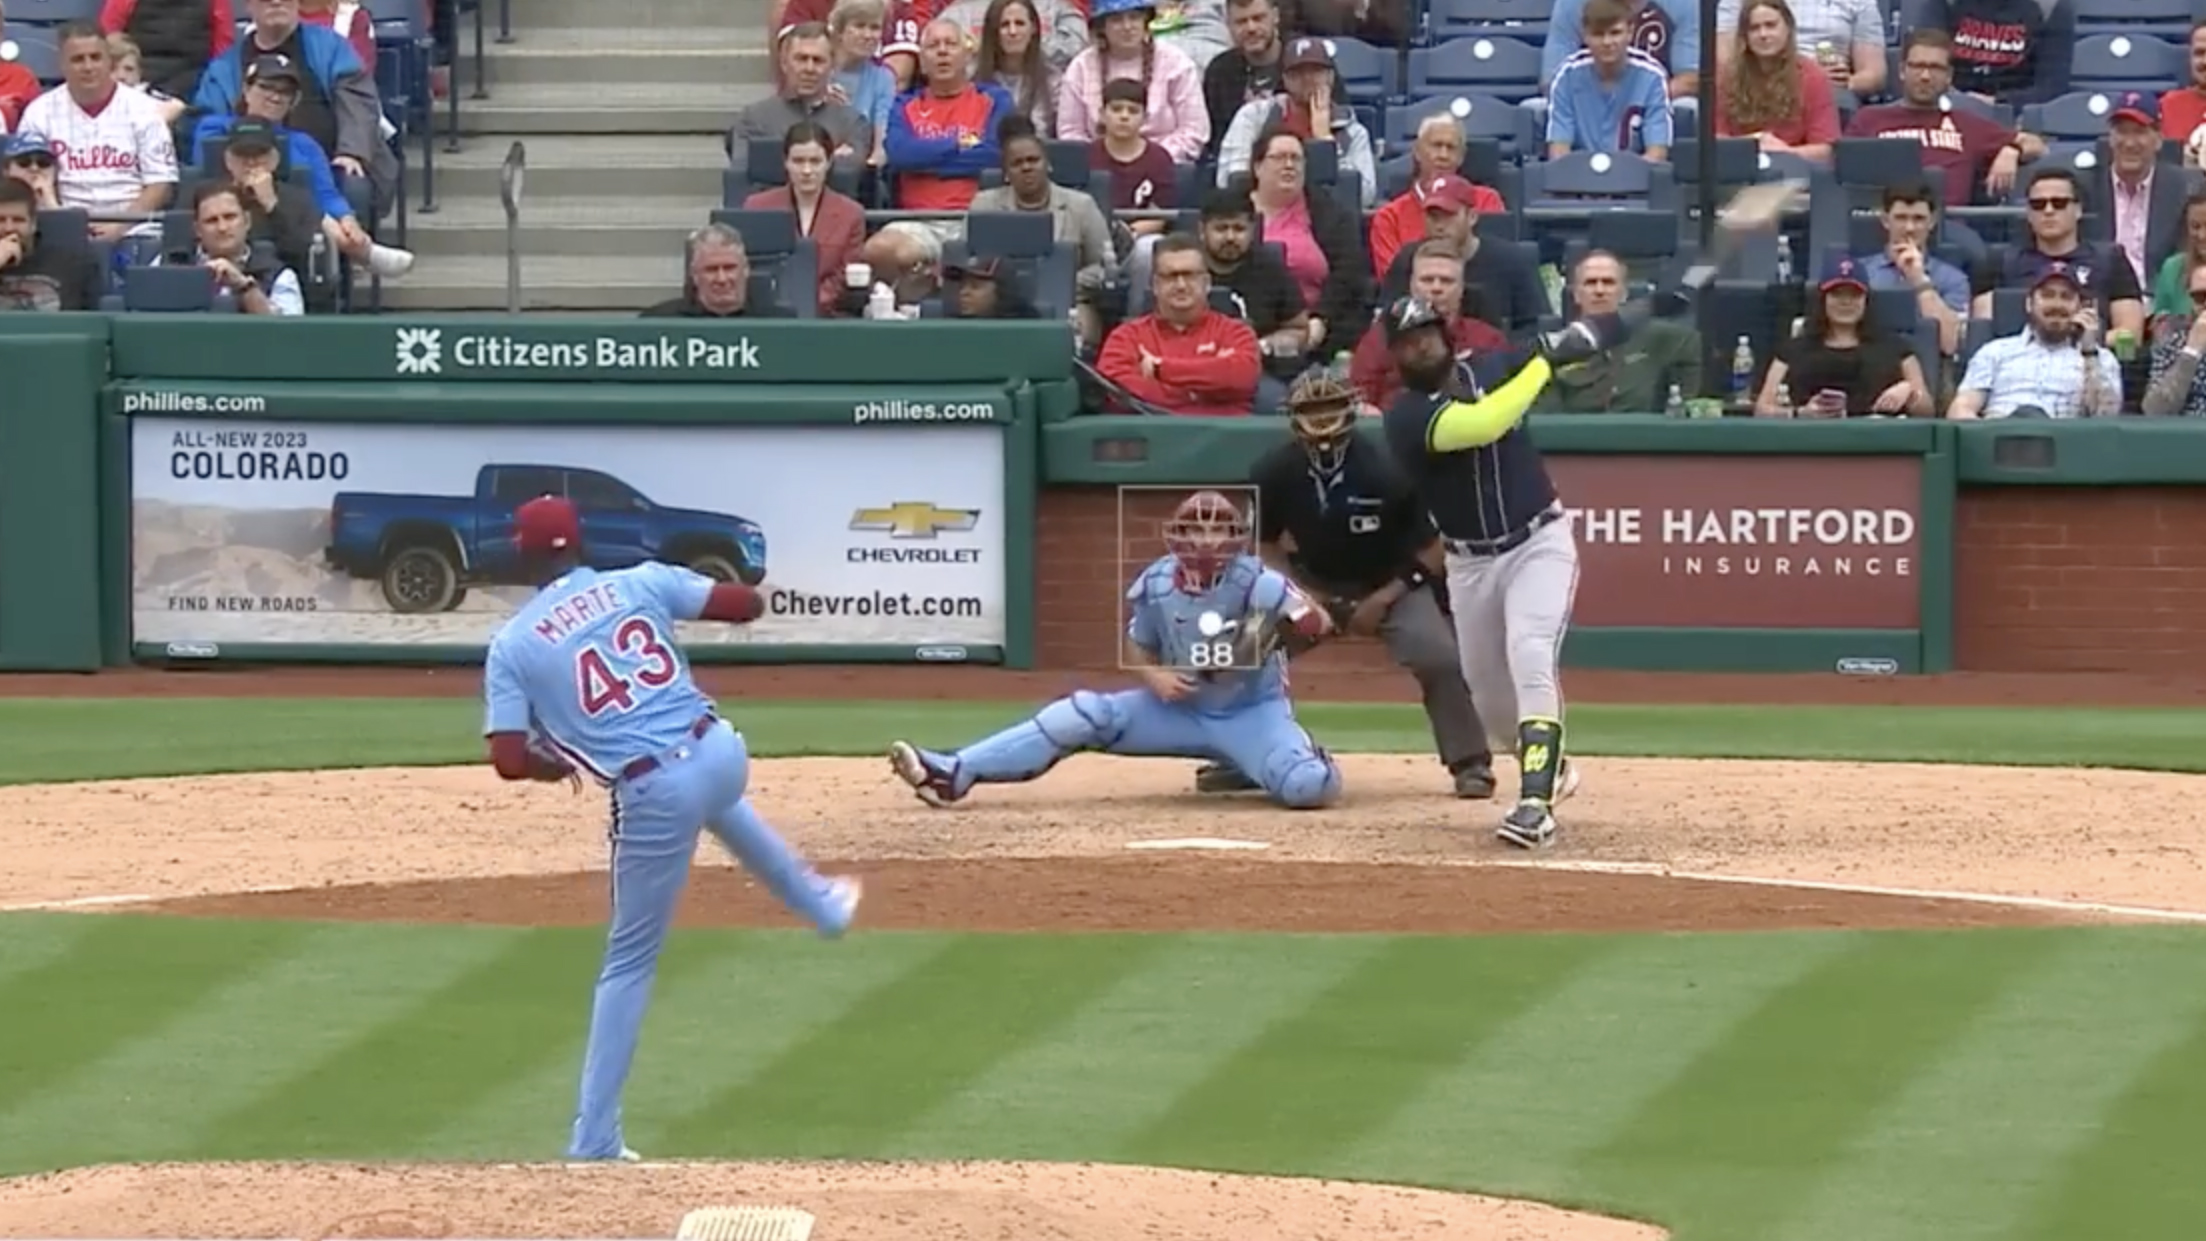 Phillies-Braves: Radio announcer has hilarious call of Ozuna homer